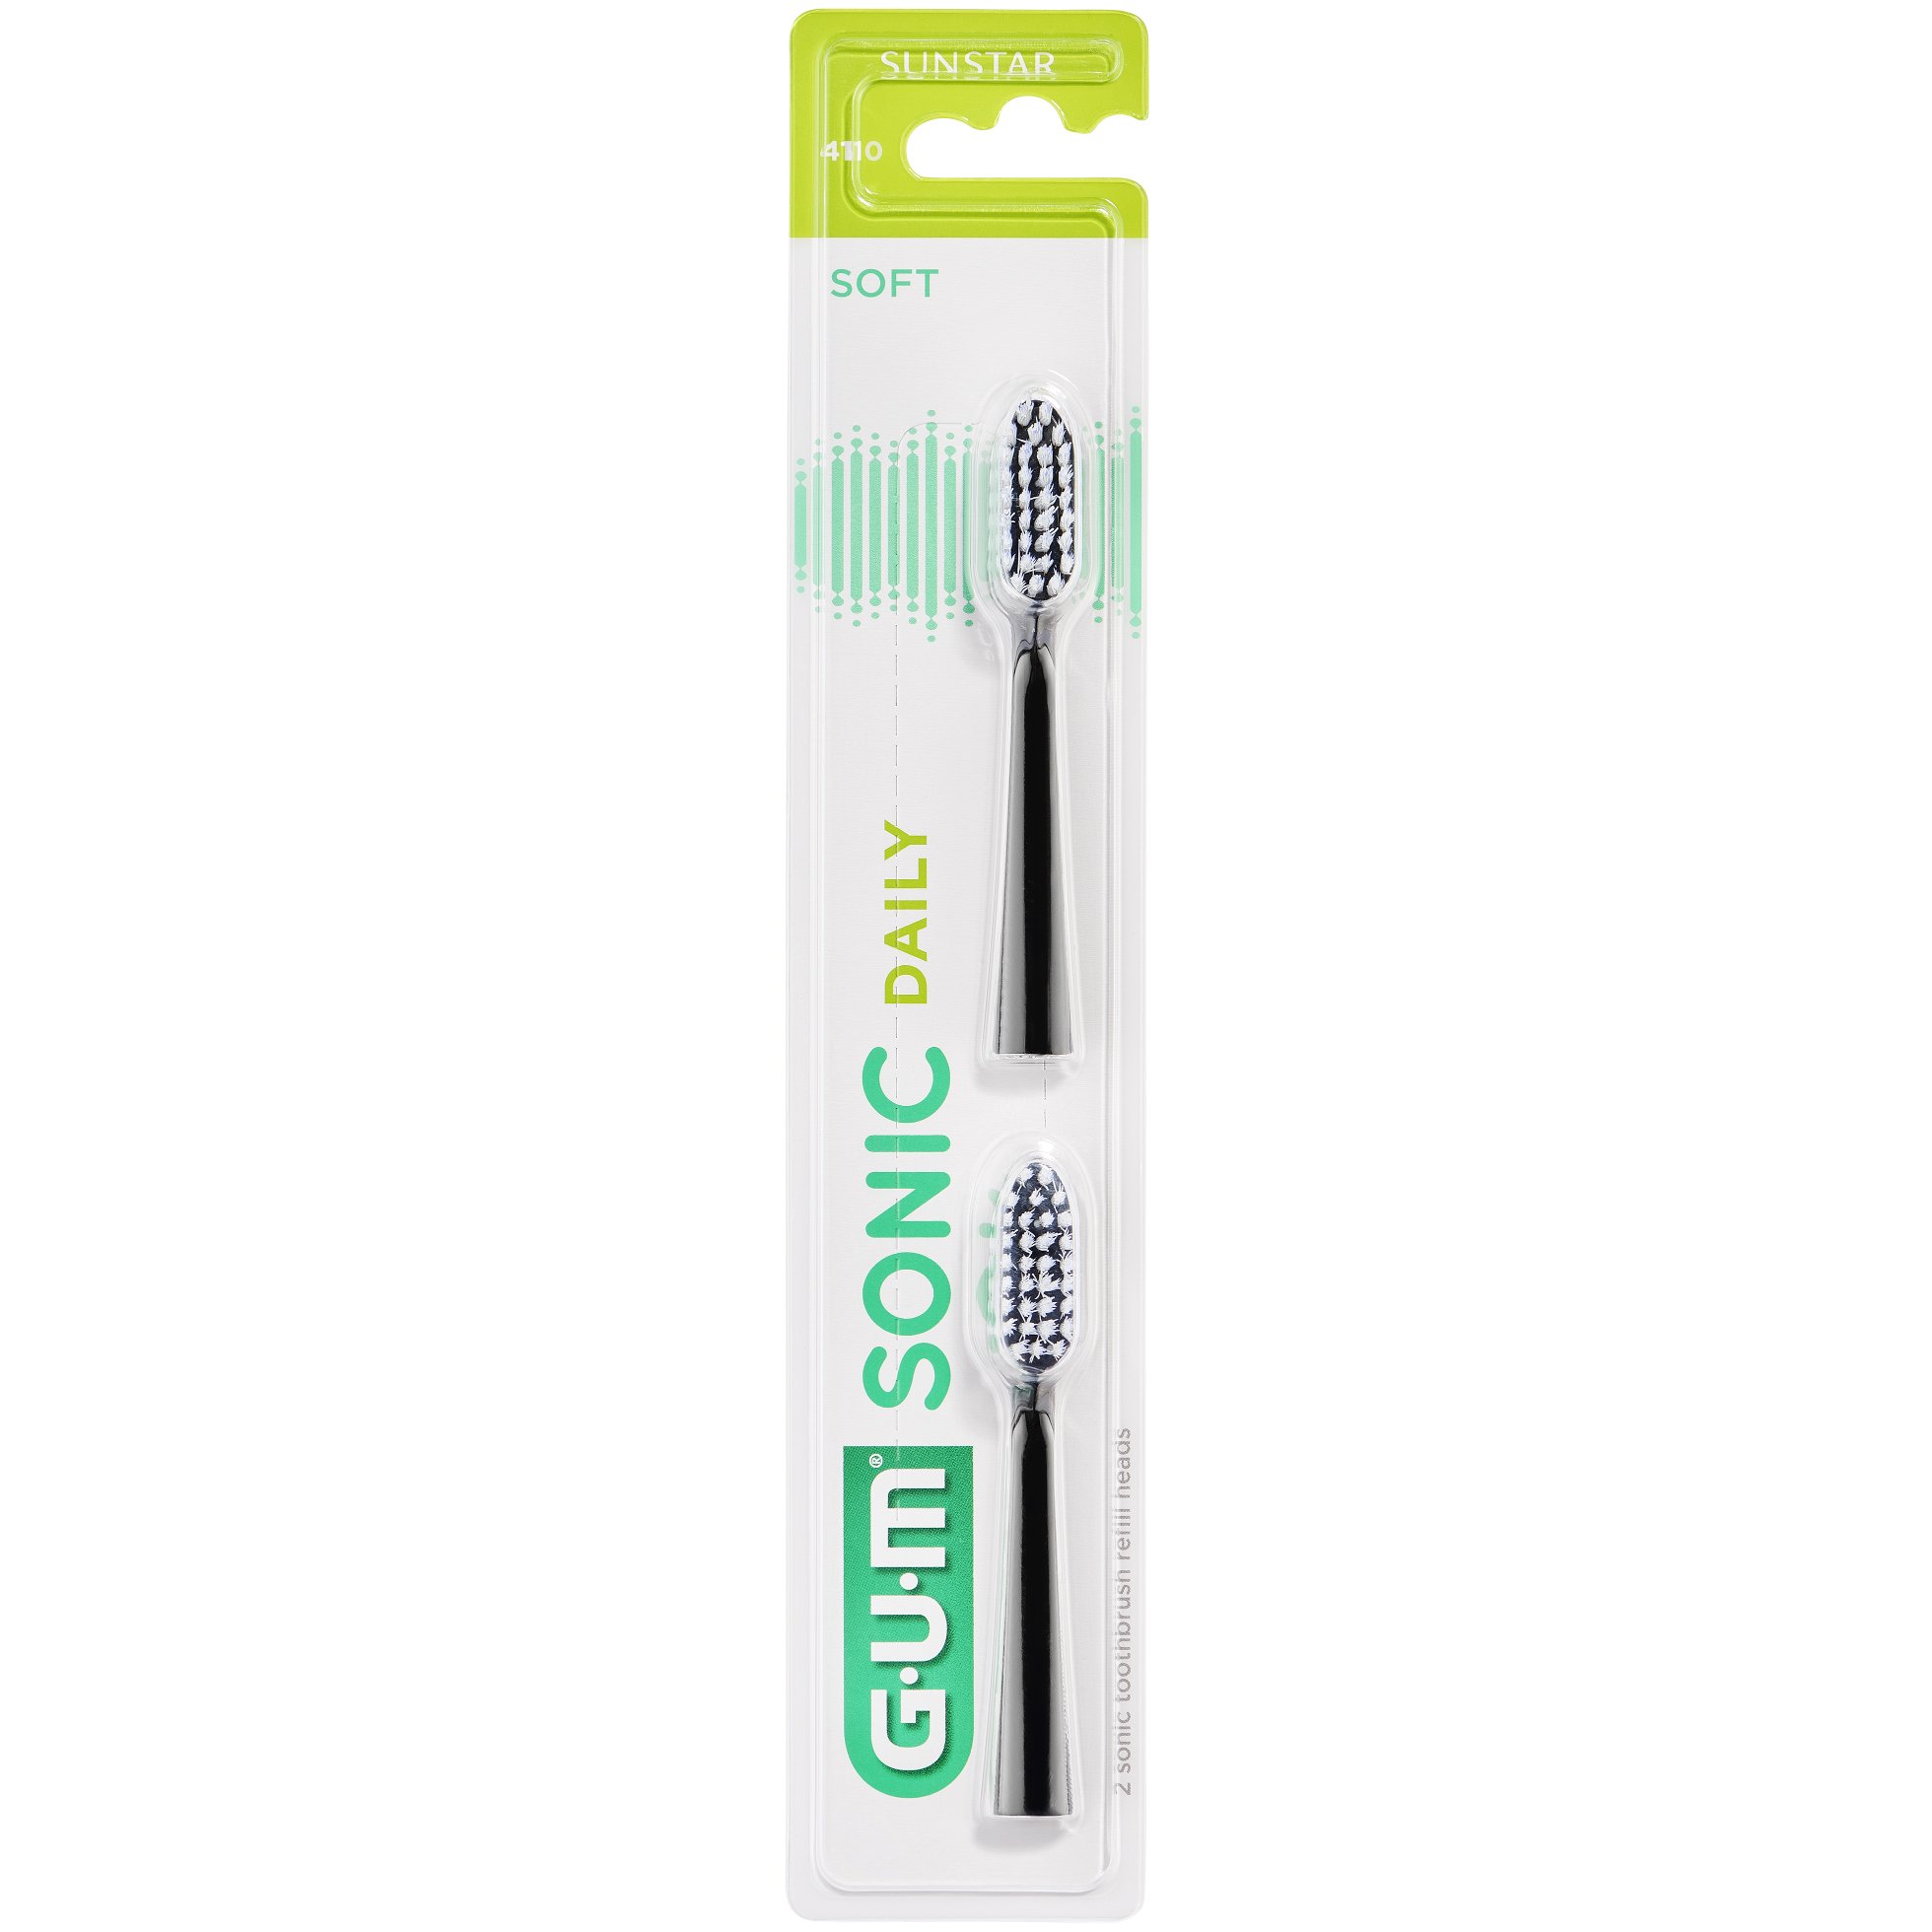 Gum Sonic Daily 4110 Soft Toothbrush Refills Heads Ανταλλακτικές Κεφαλές 2 Τεμάχια – Μαύρο